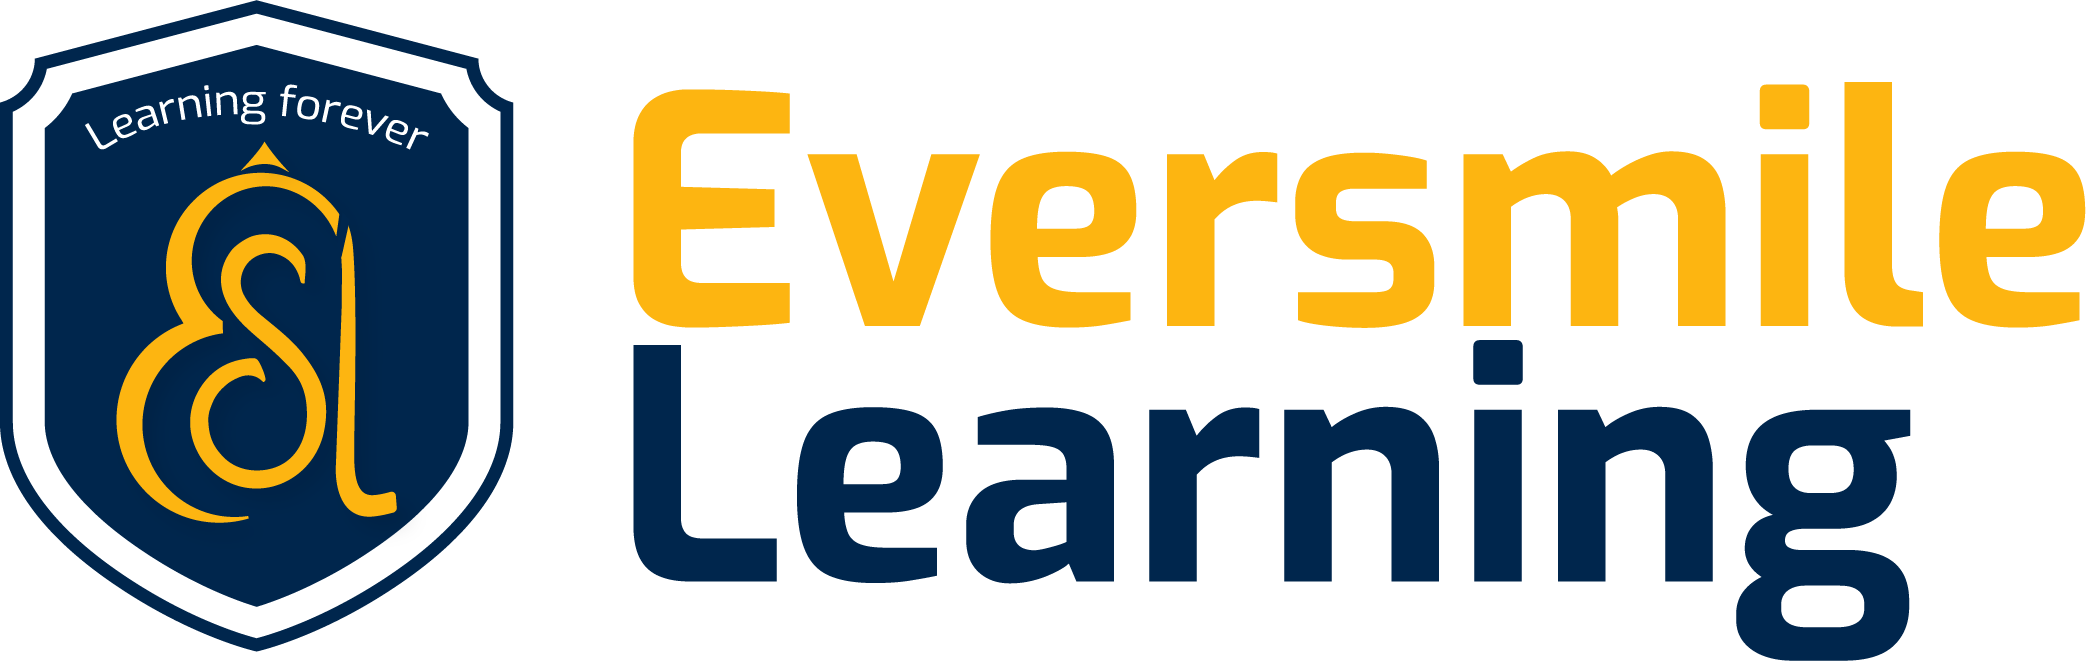 Eversmile Learning